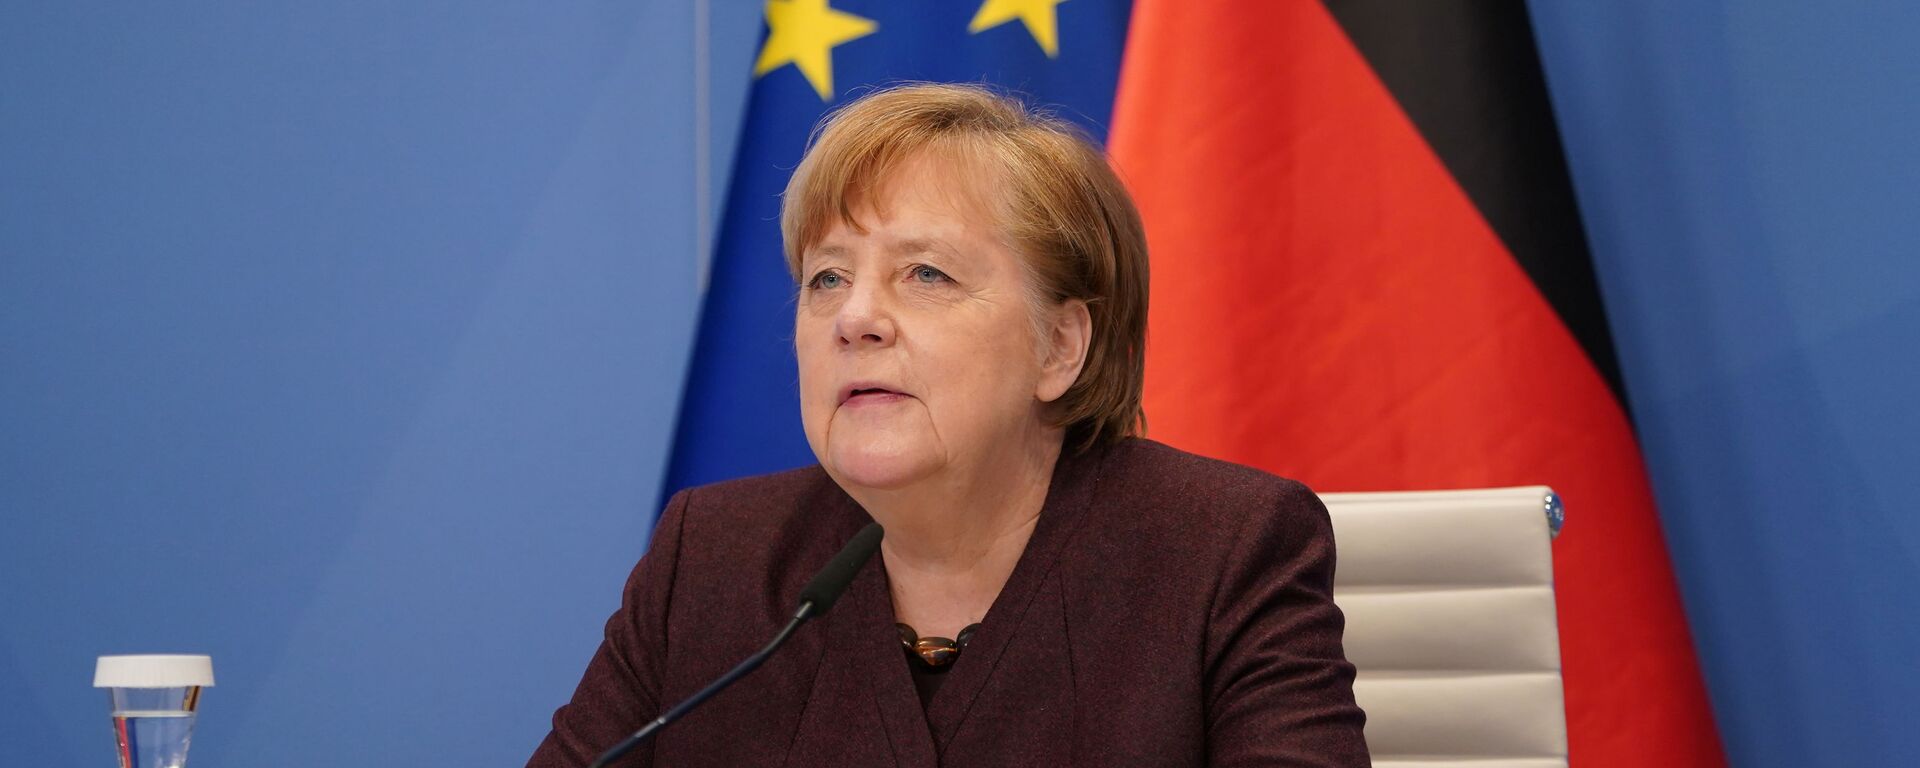 Angela Merkel, canciller alemana - Sputnik Mundo, 1920, 26.01.2021